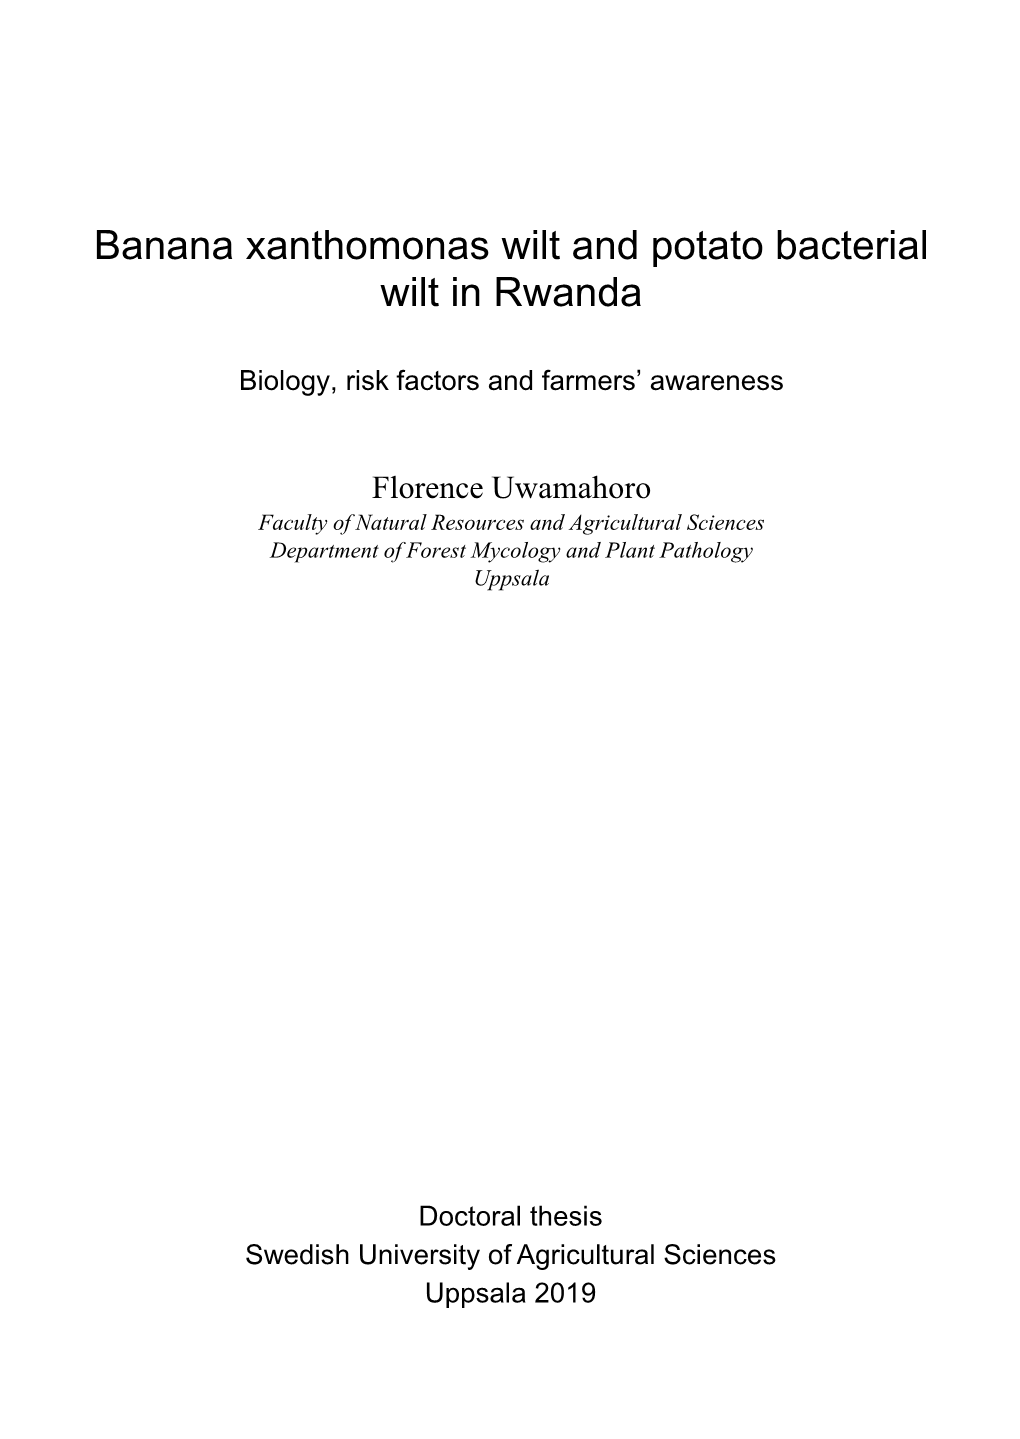 Banana Xanthomonas Wilt and Potato Bacterial Wilt in Rwanda